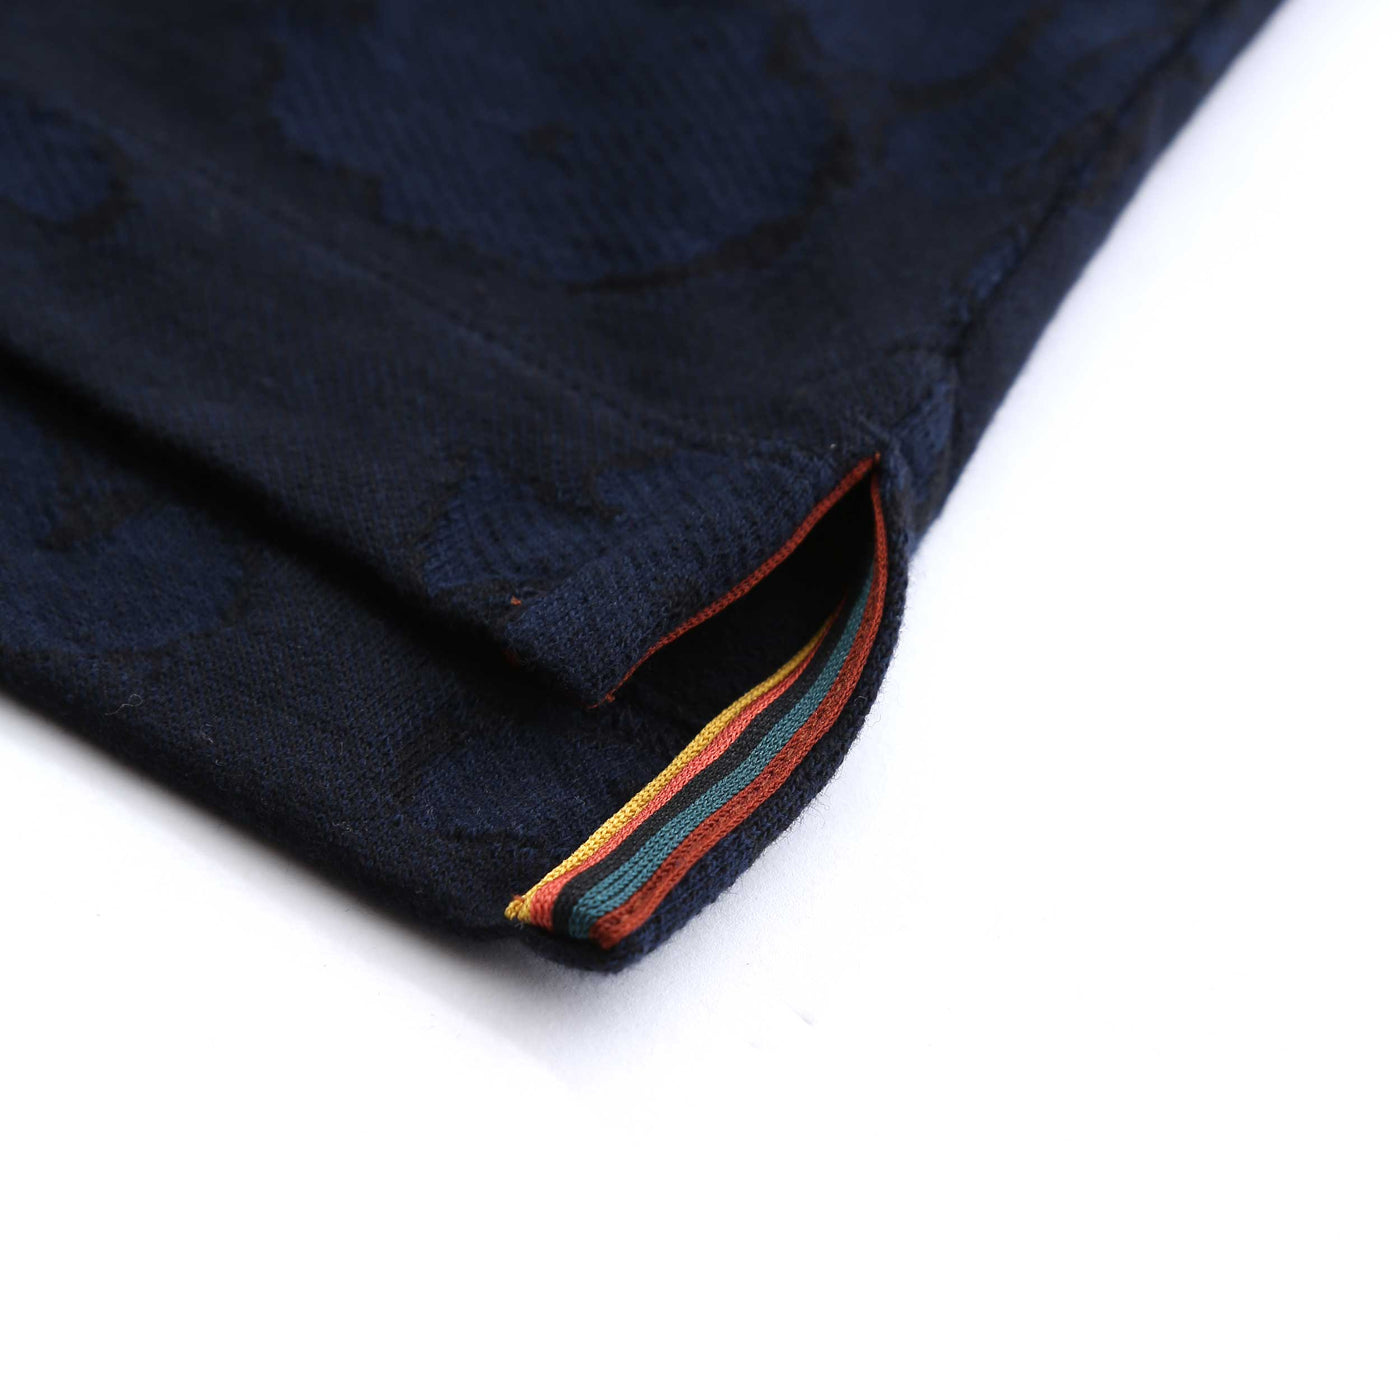 Paul Smith Floral Jacquard Polo Shirt in Dark Navy Stripe Design